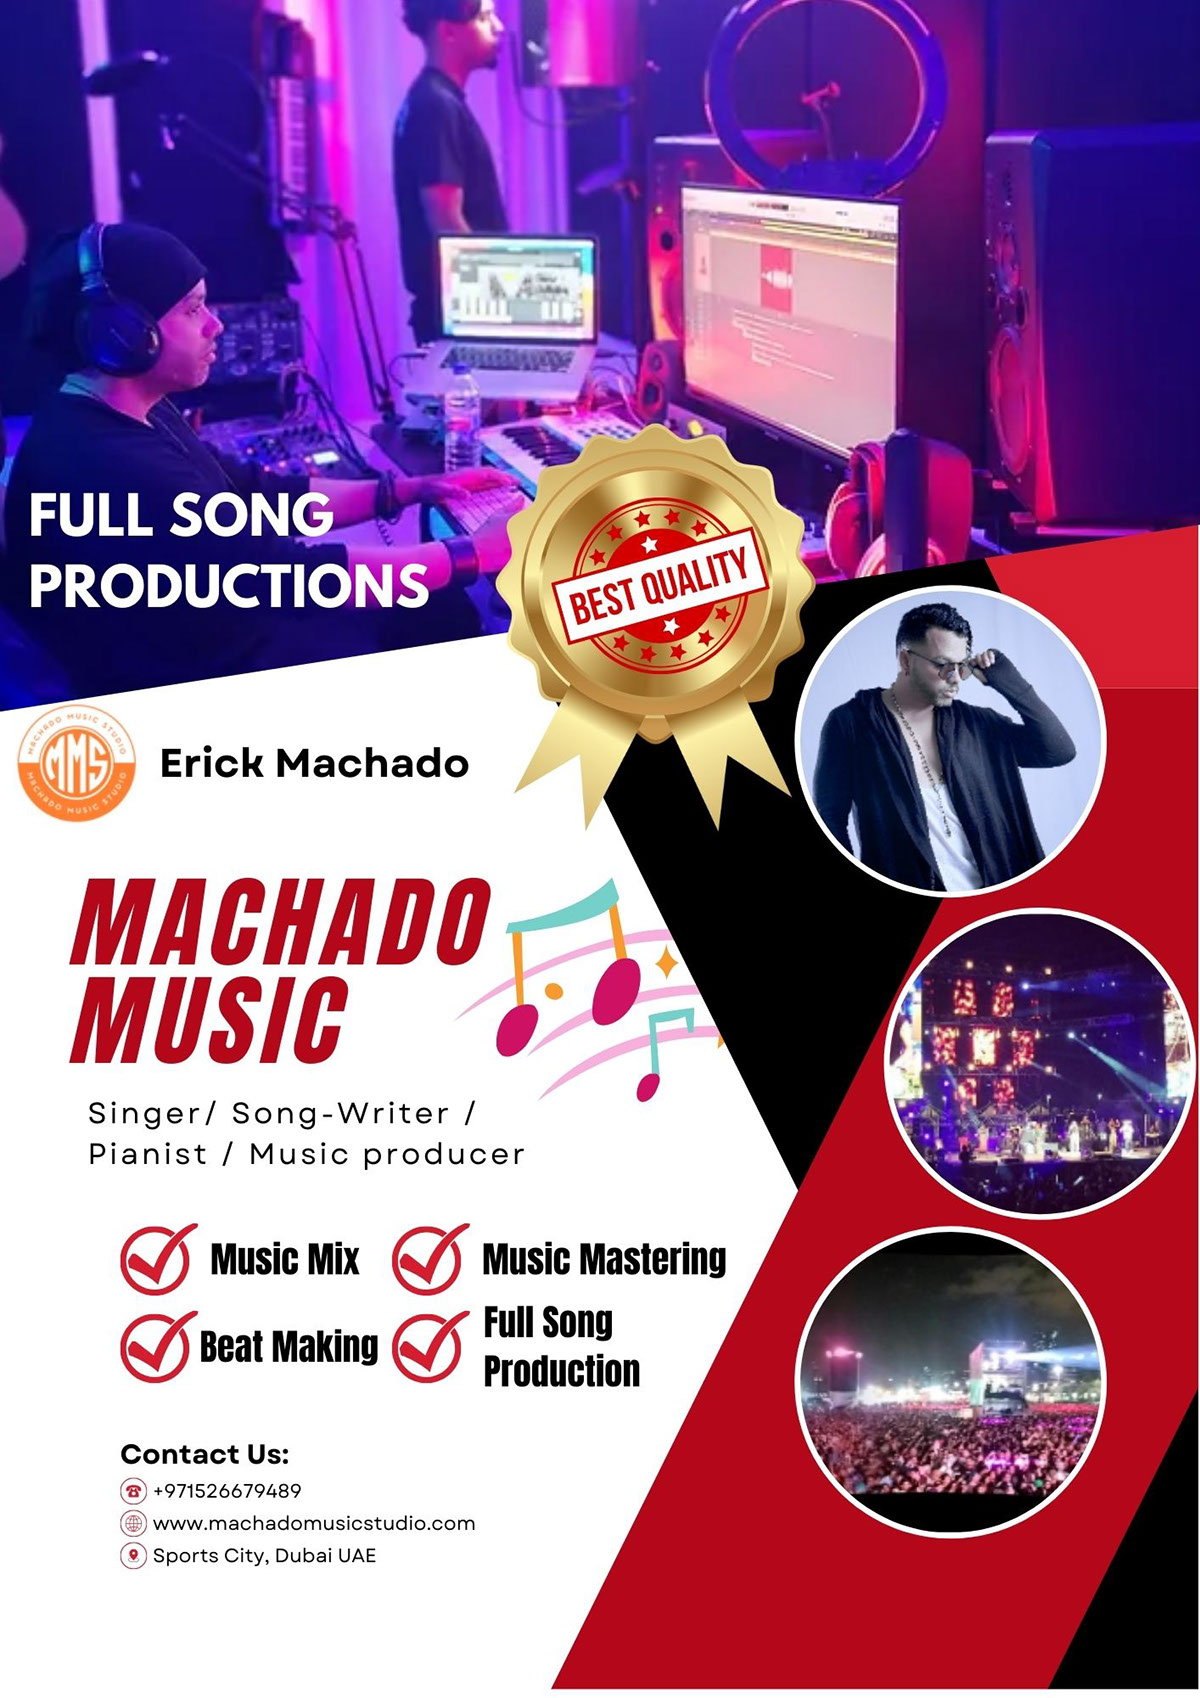 Machado Music Studio rendition image